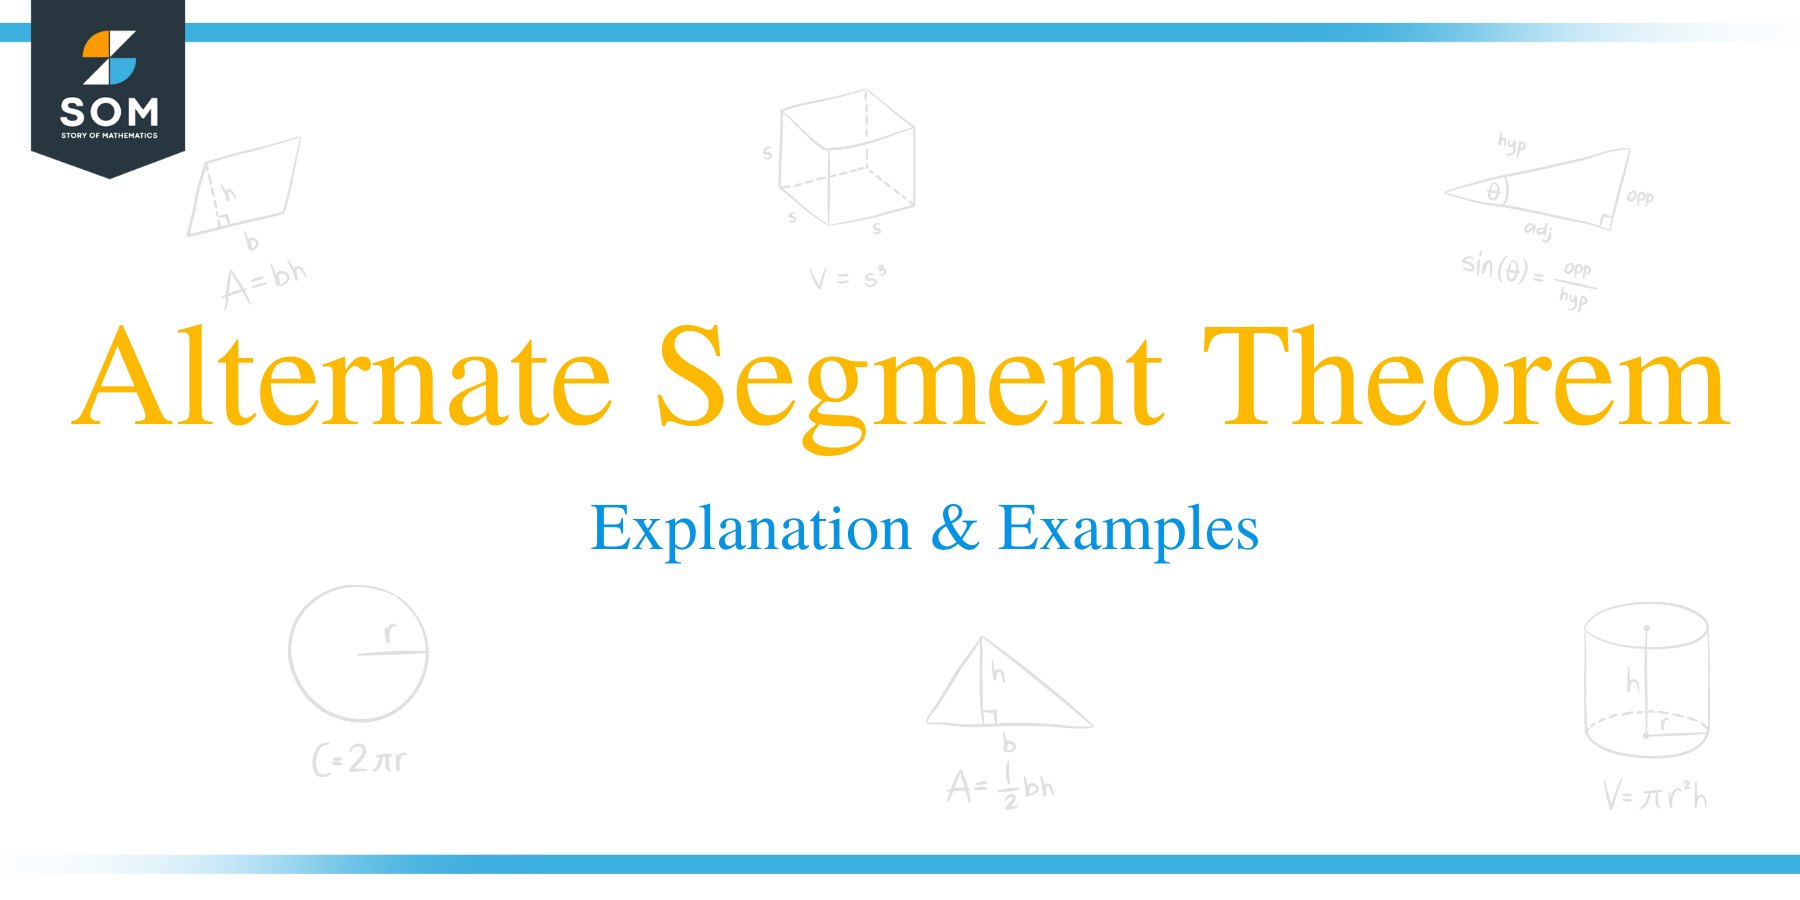 Alternate Segment Theorem